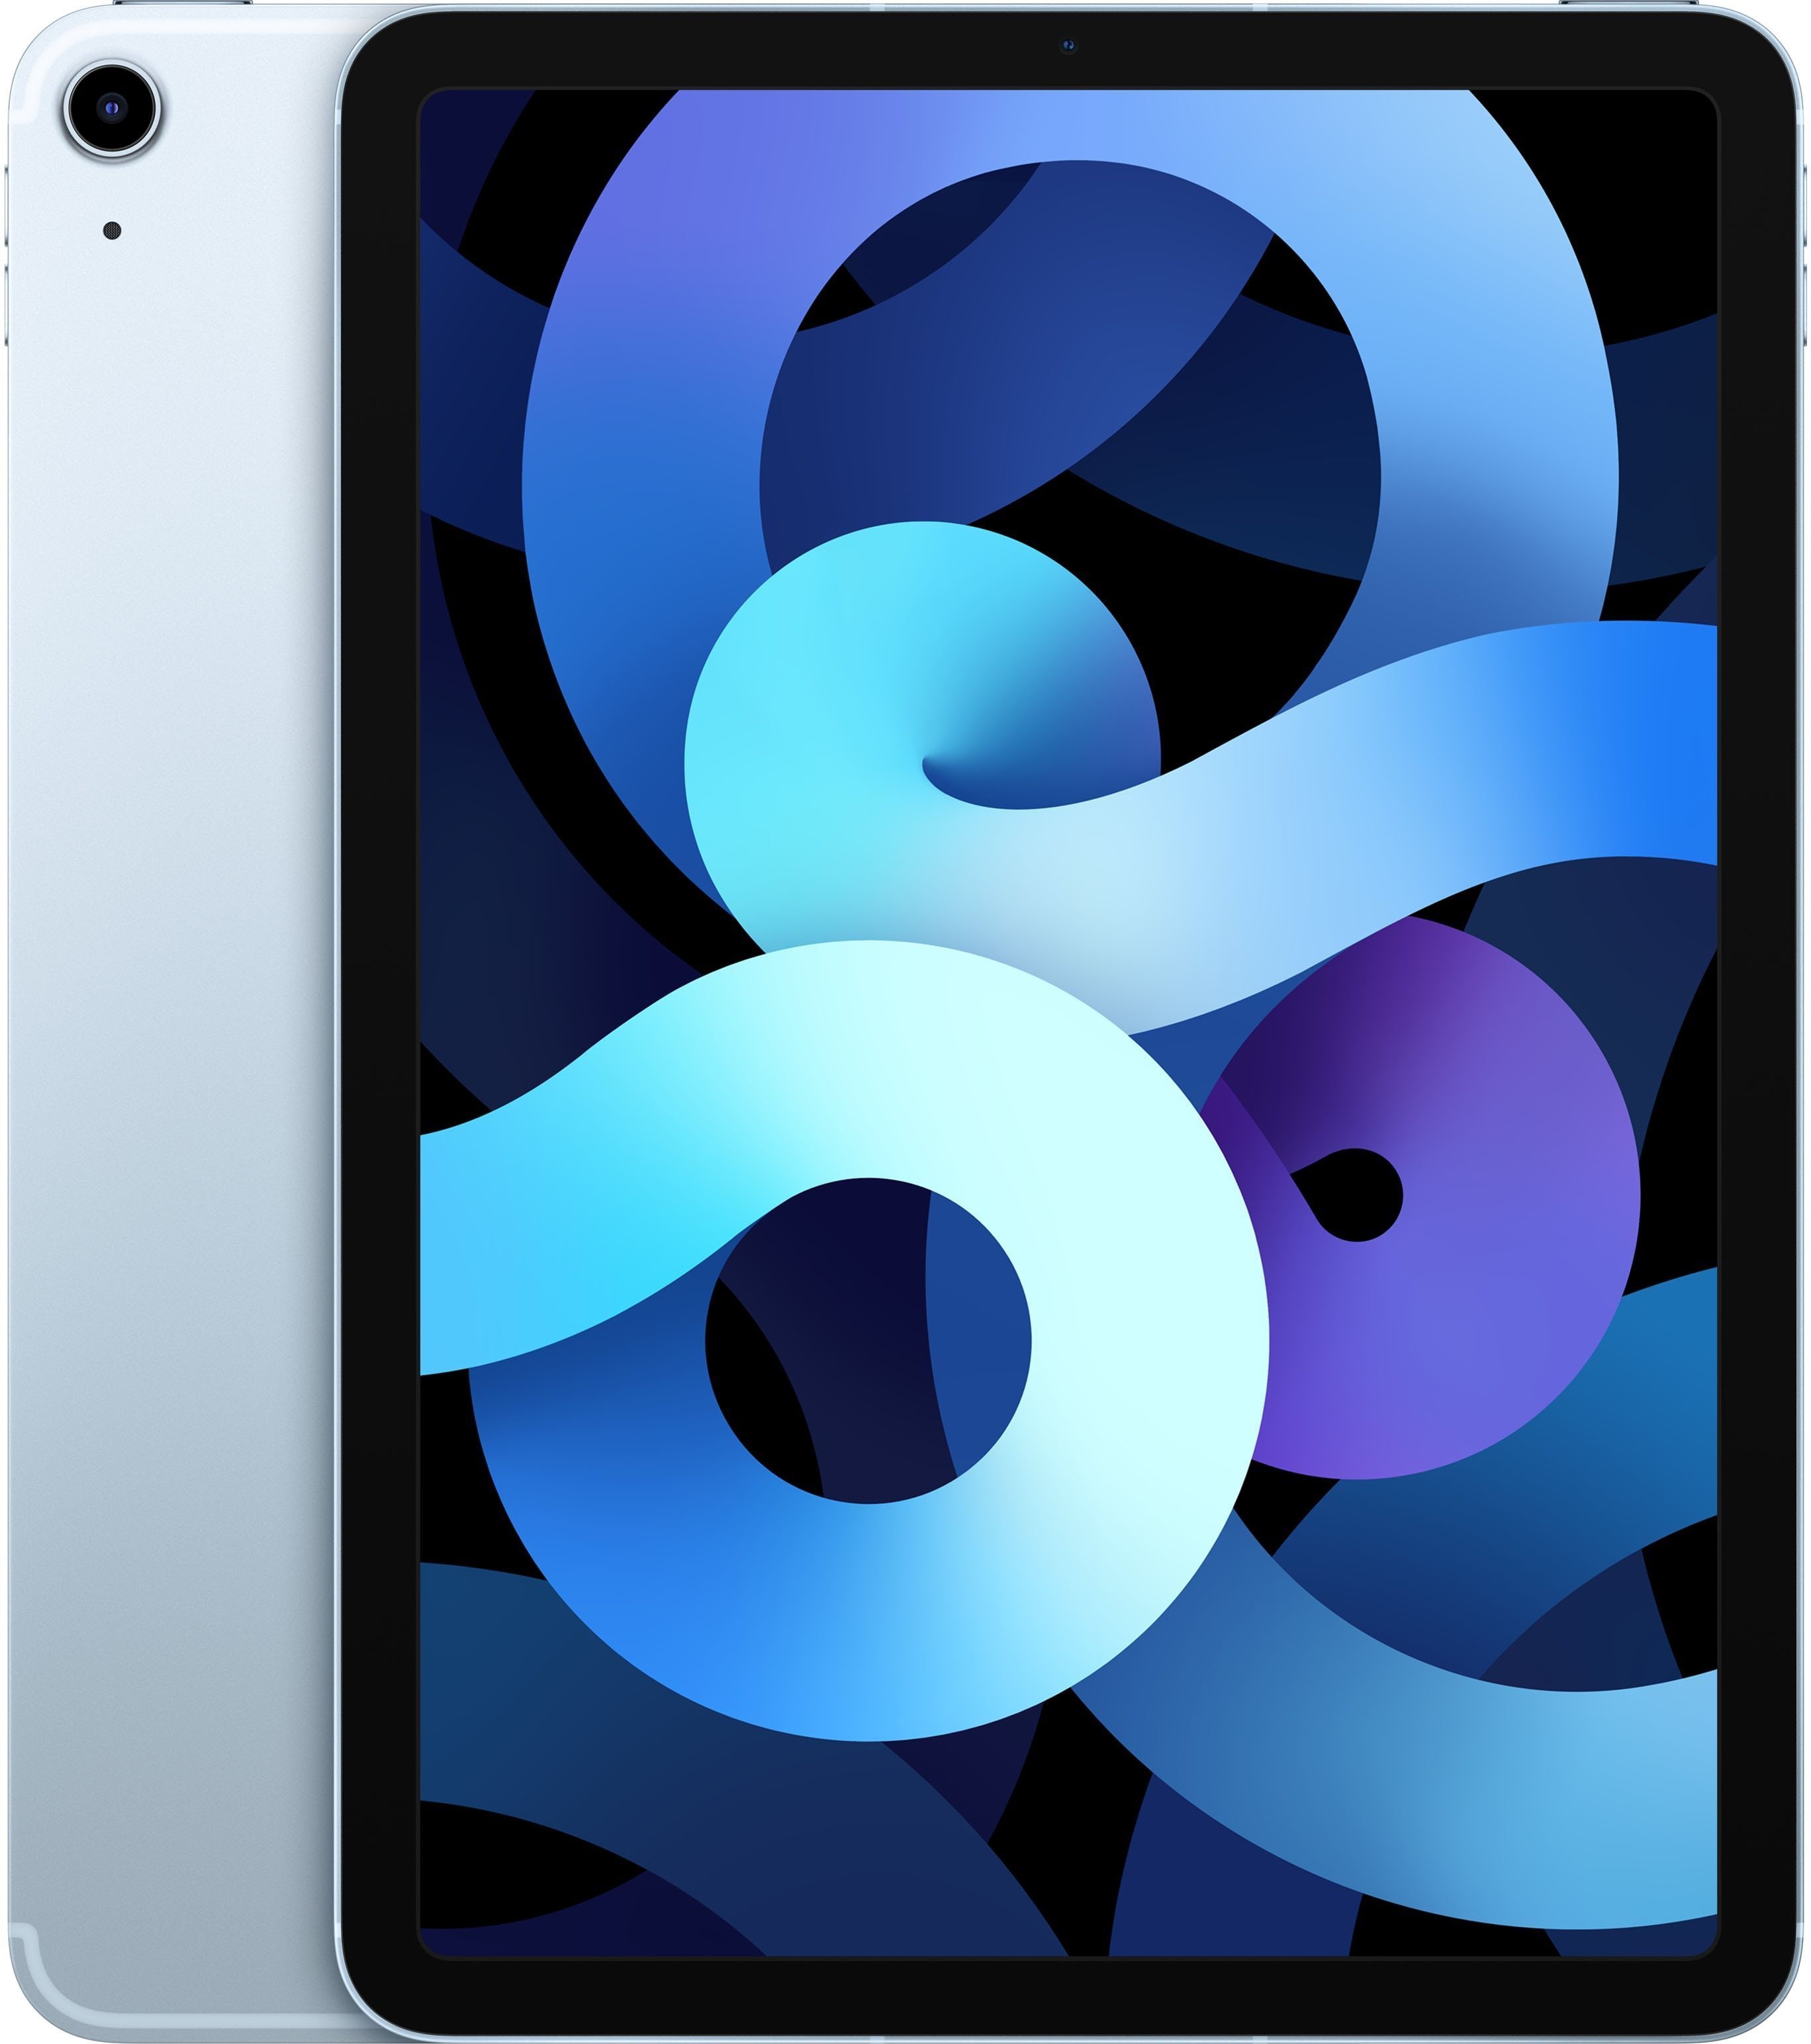 Tablet iPad Air 64 GB Cellular Blankytne modrý 2020 Screen